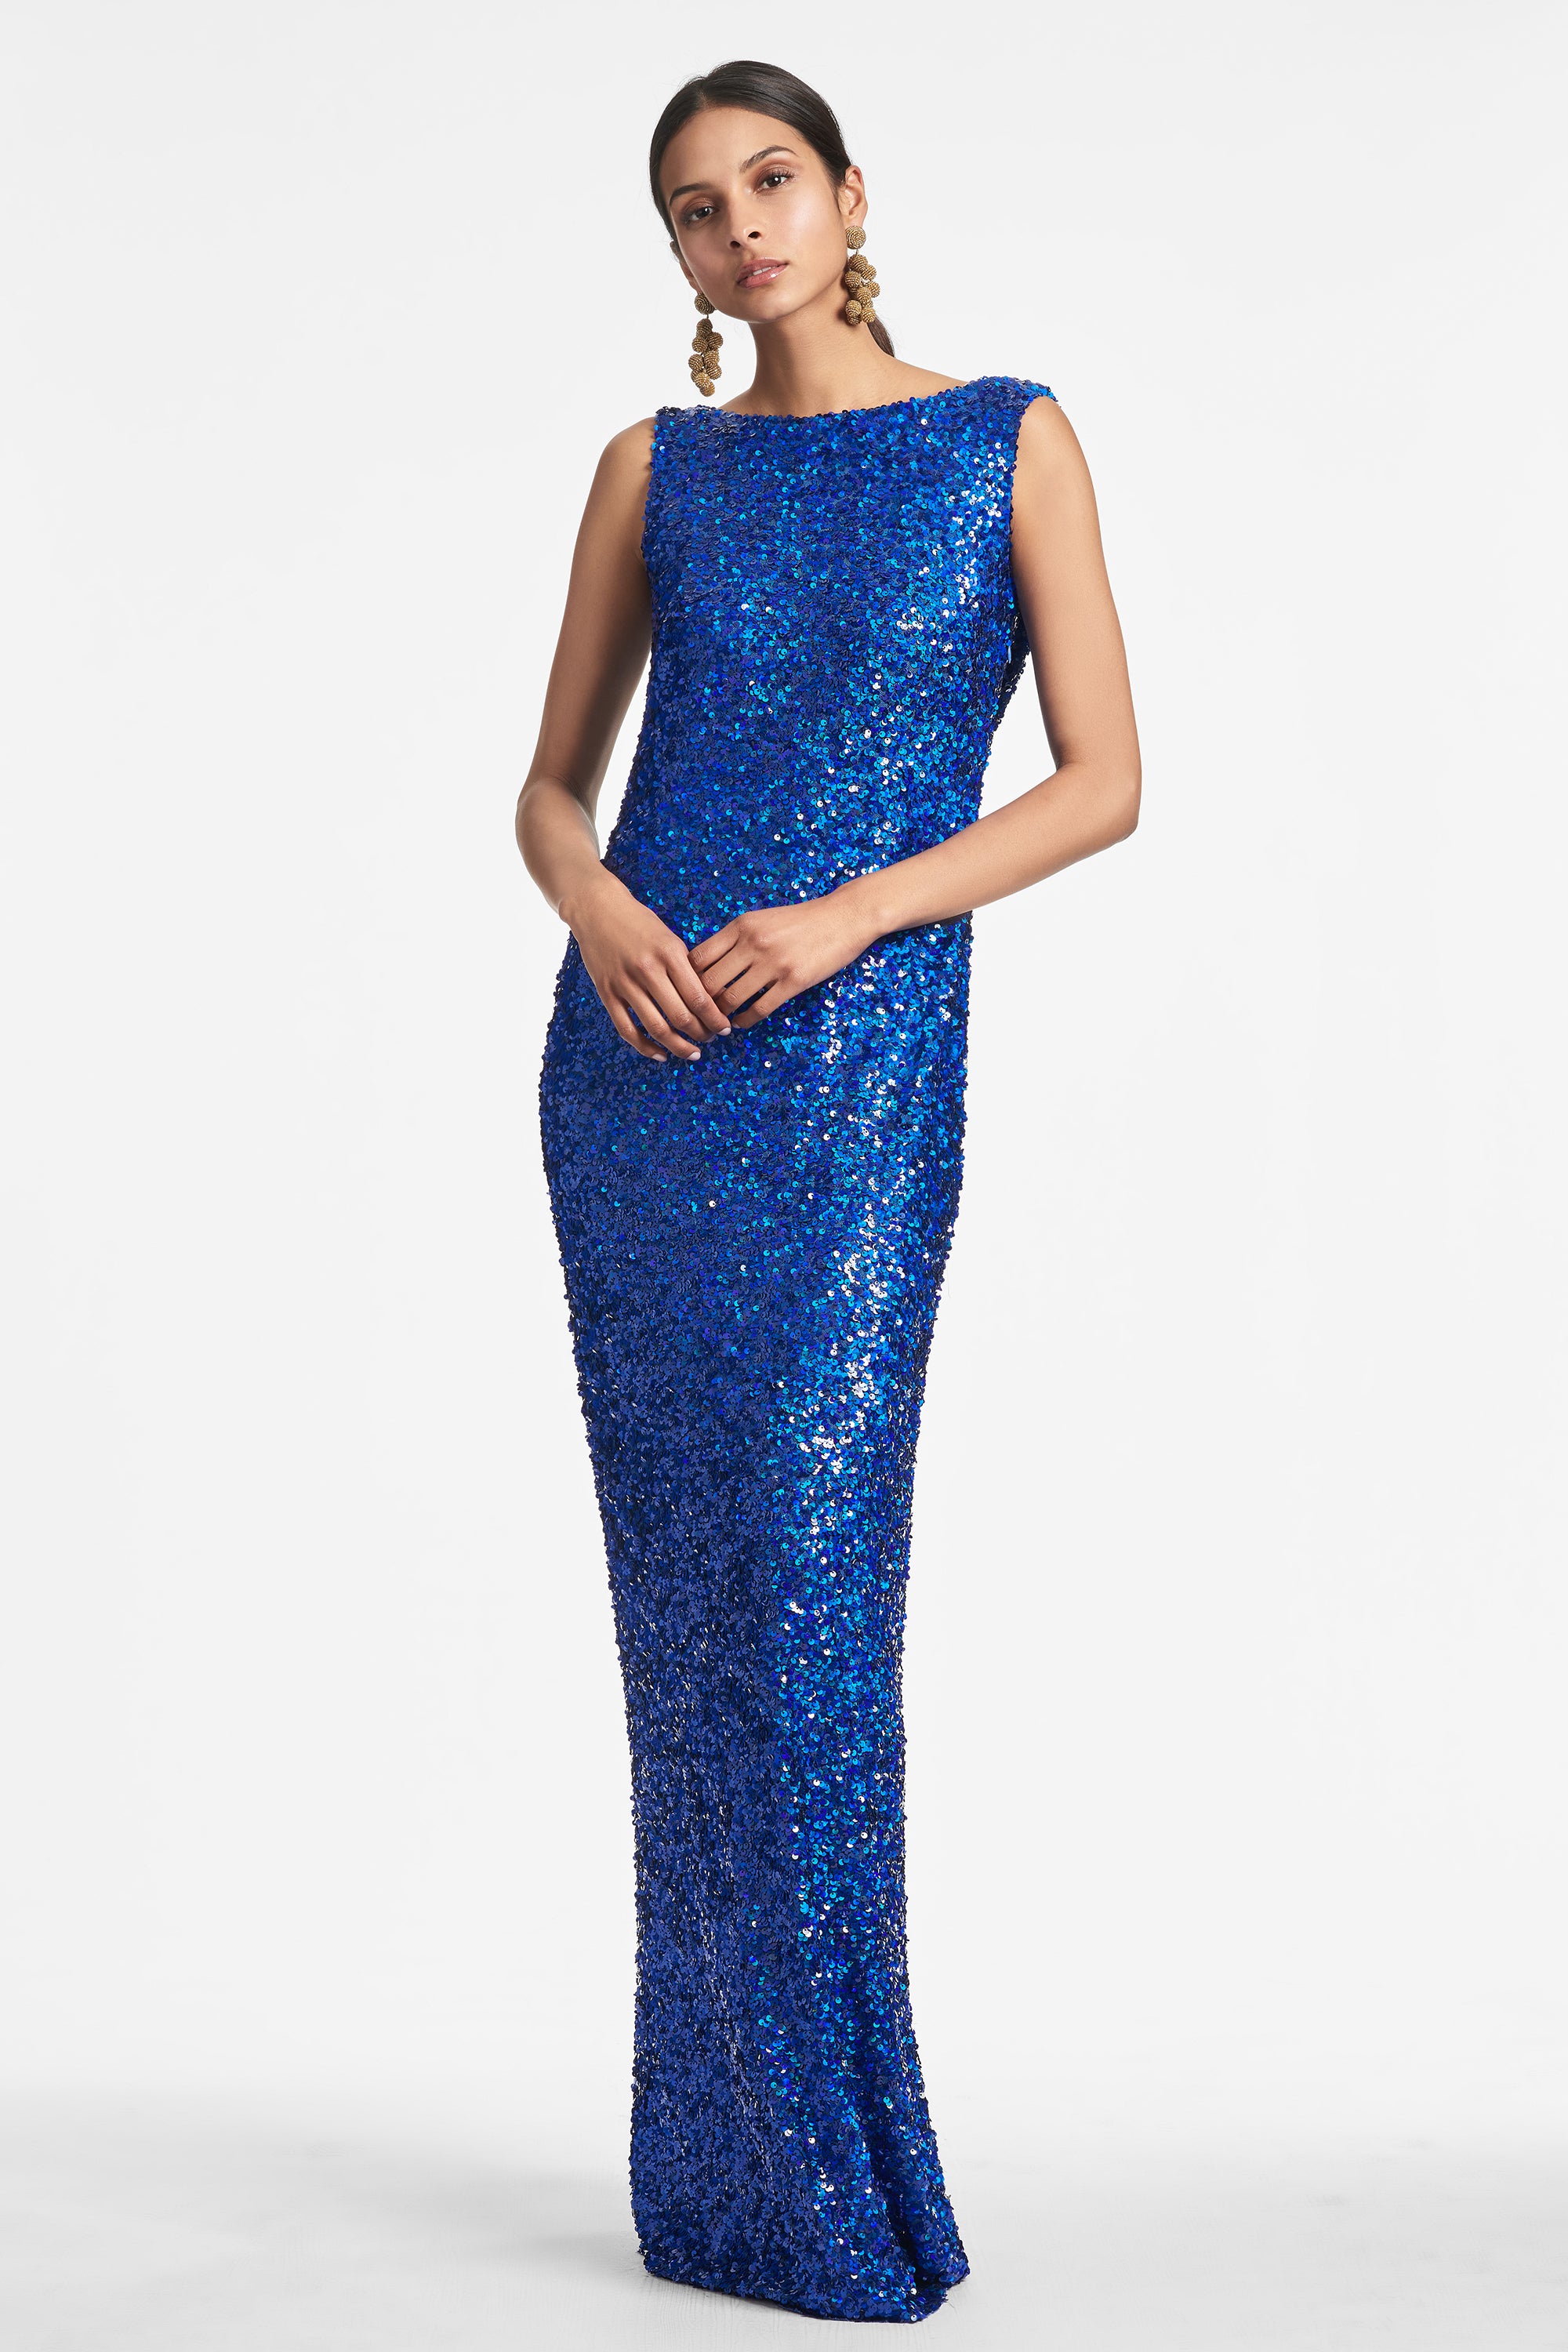 Asos Dress Sale|elegant Sequined Evening Gown - Plus Size Square Collar  Formal Dress